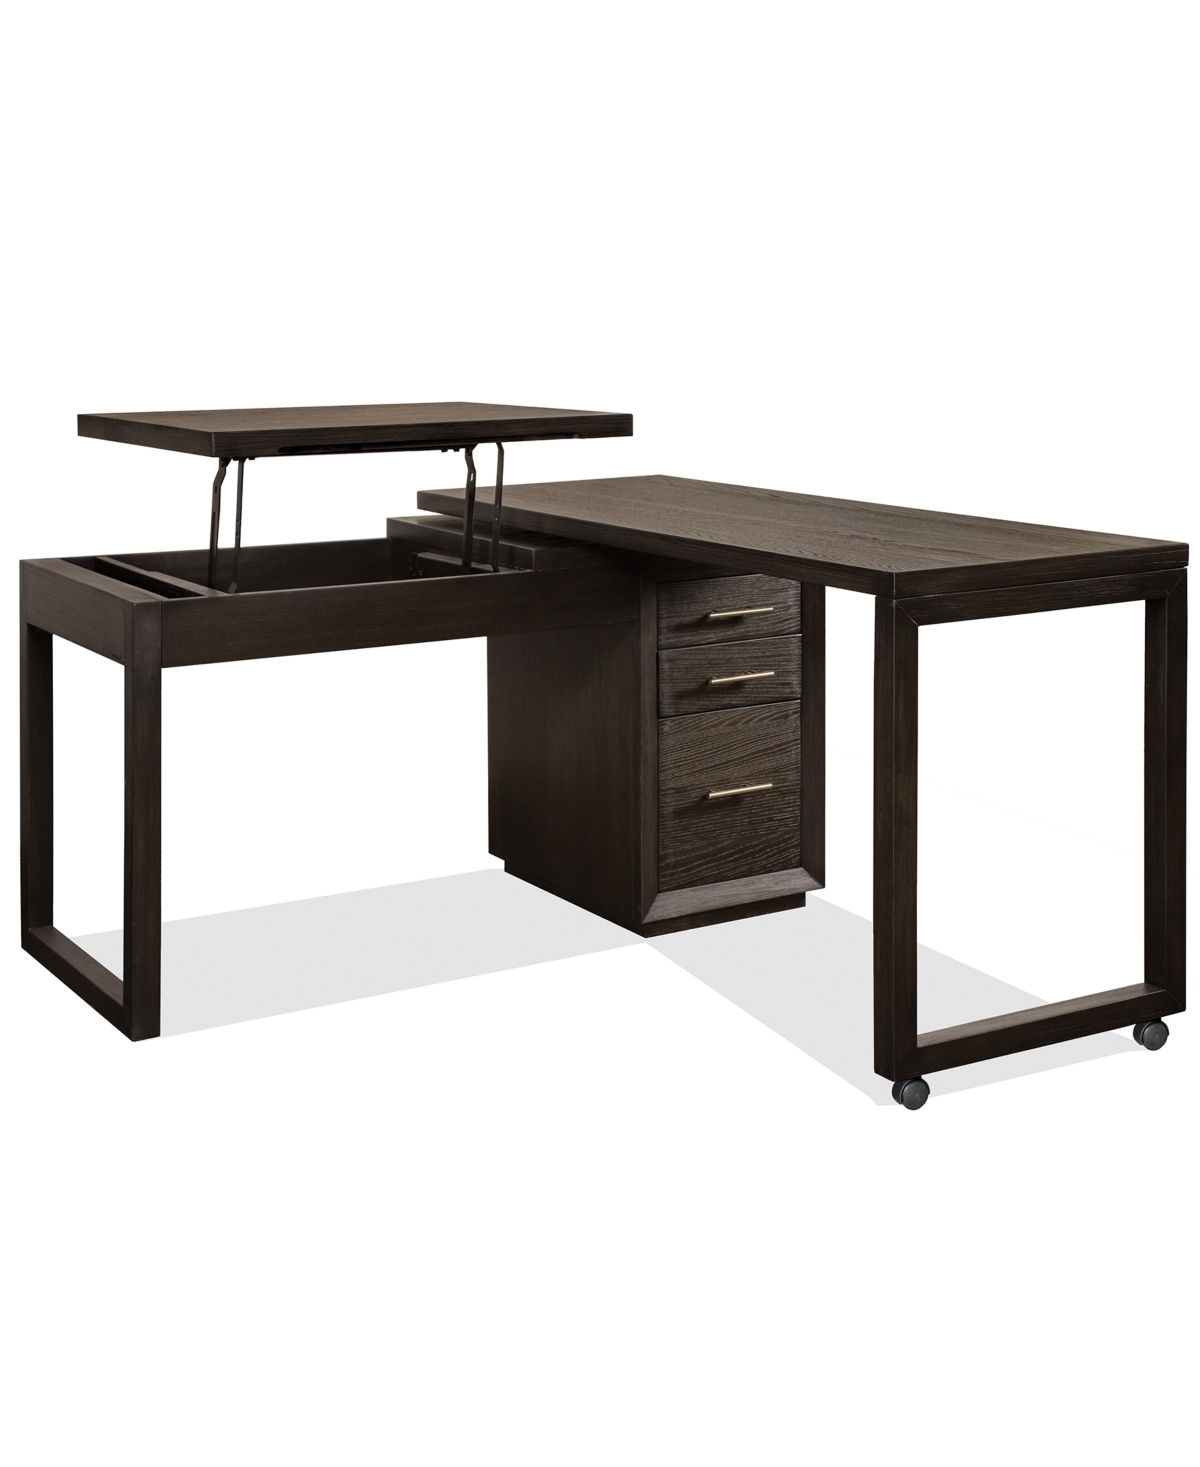 Furniture Prelude 56" Wood Swivel Lift Top L-shaped Desk In Umber